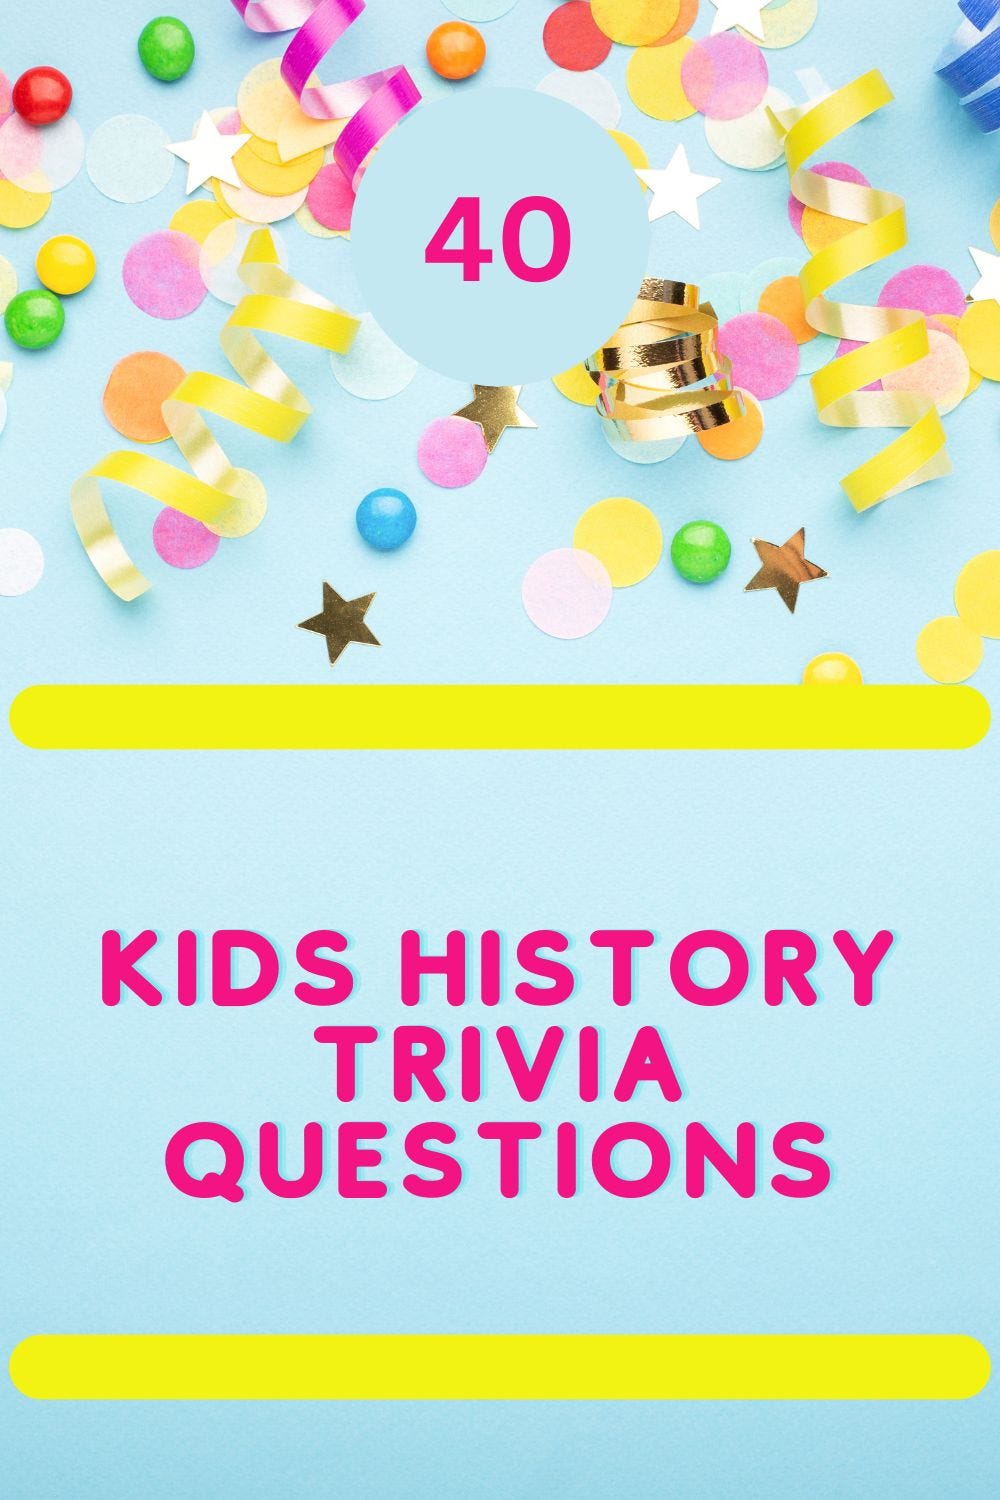 40 Kids History Trivia Questions